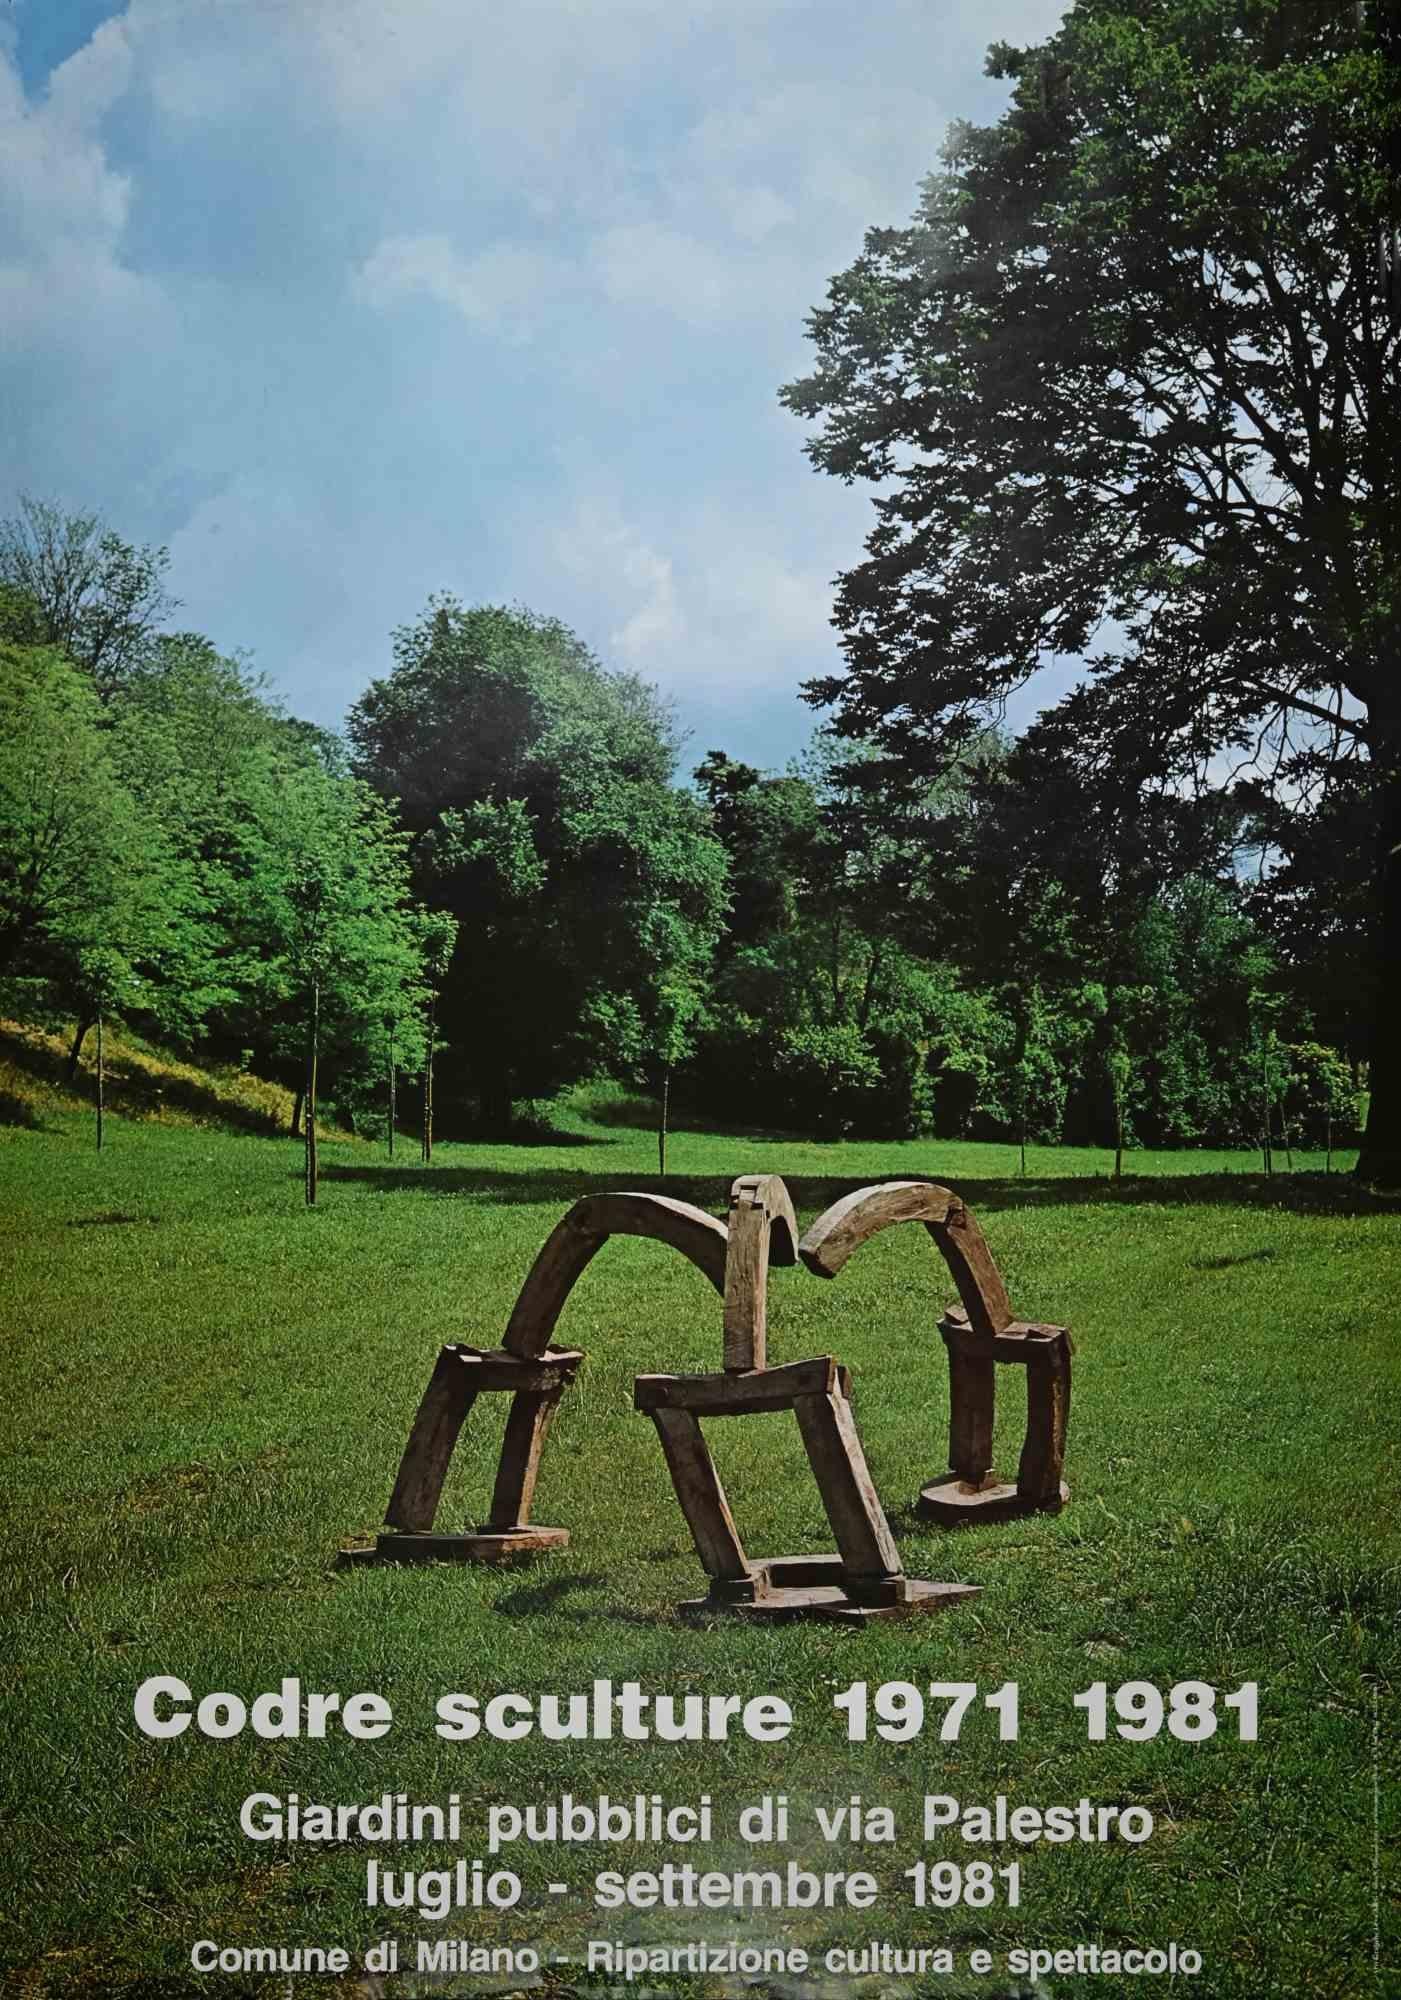 Codre-Skulptur in Mailand – Vintage-Plakat, 1981